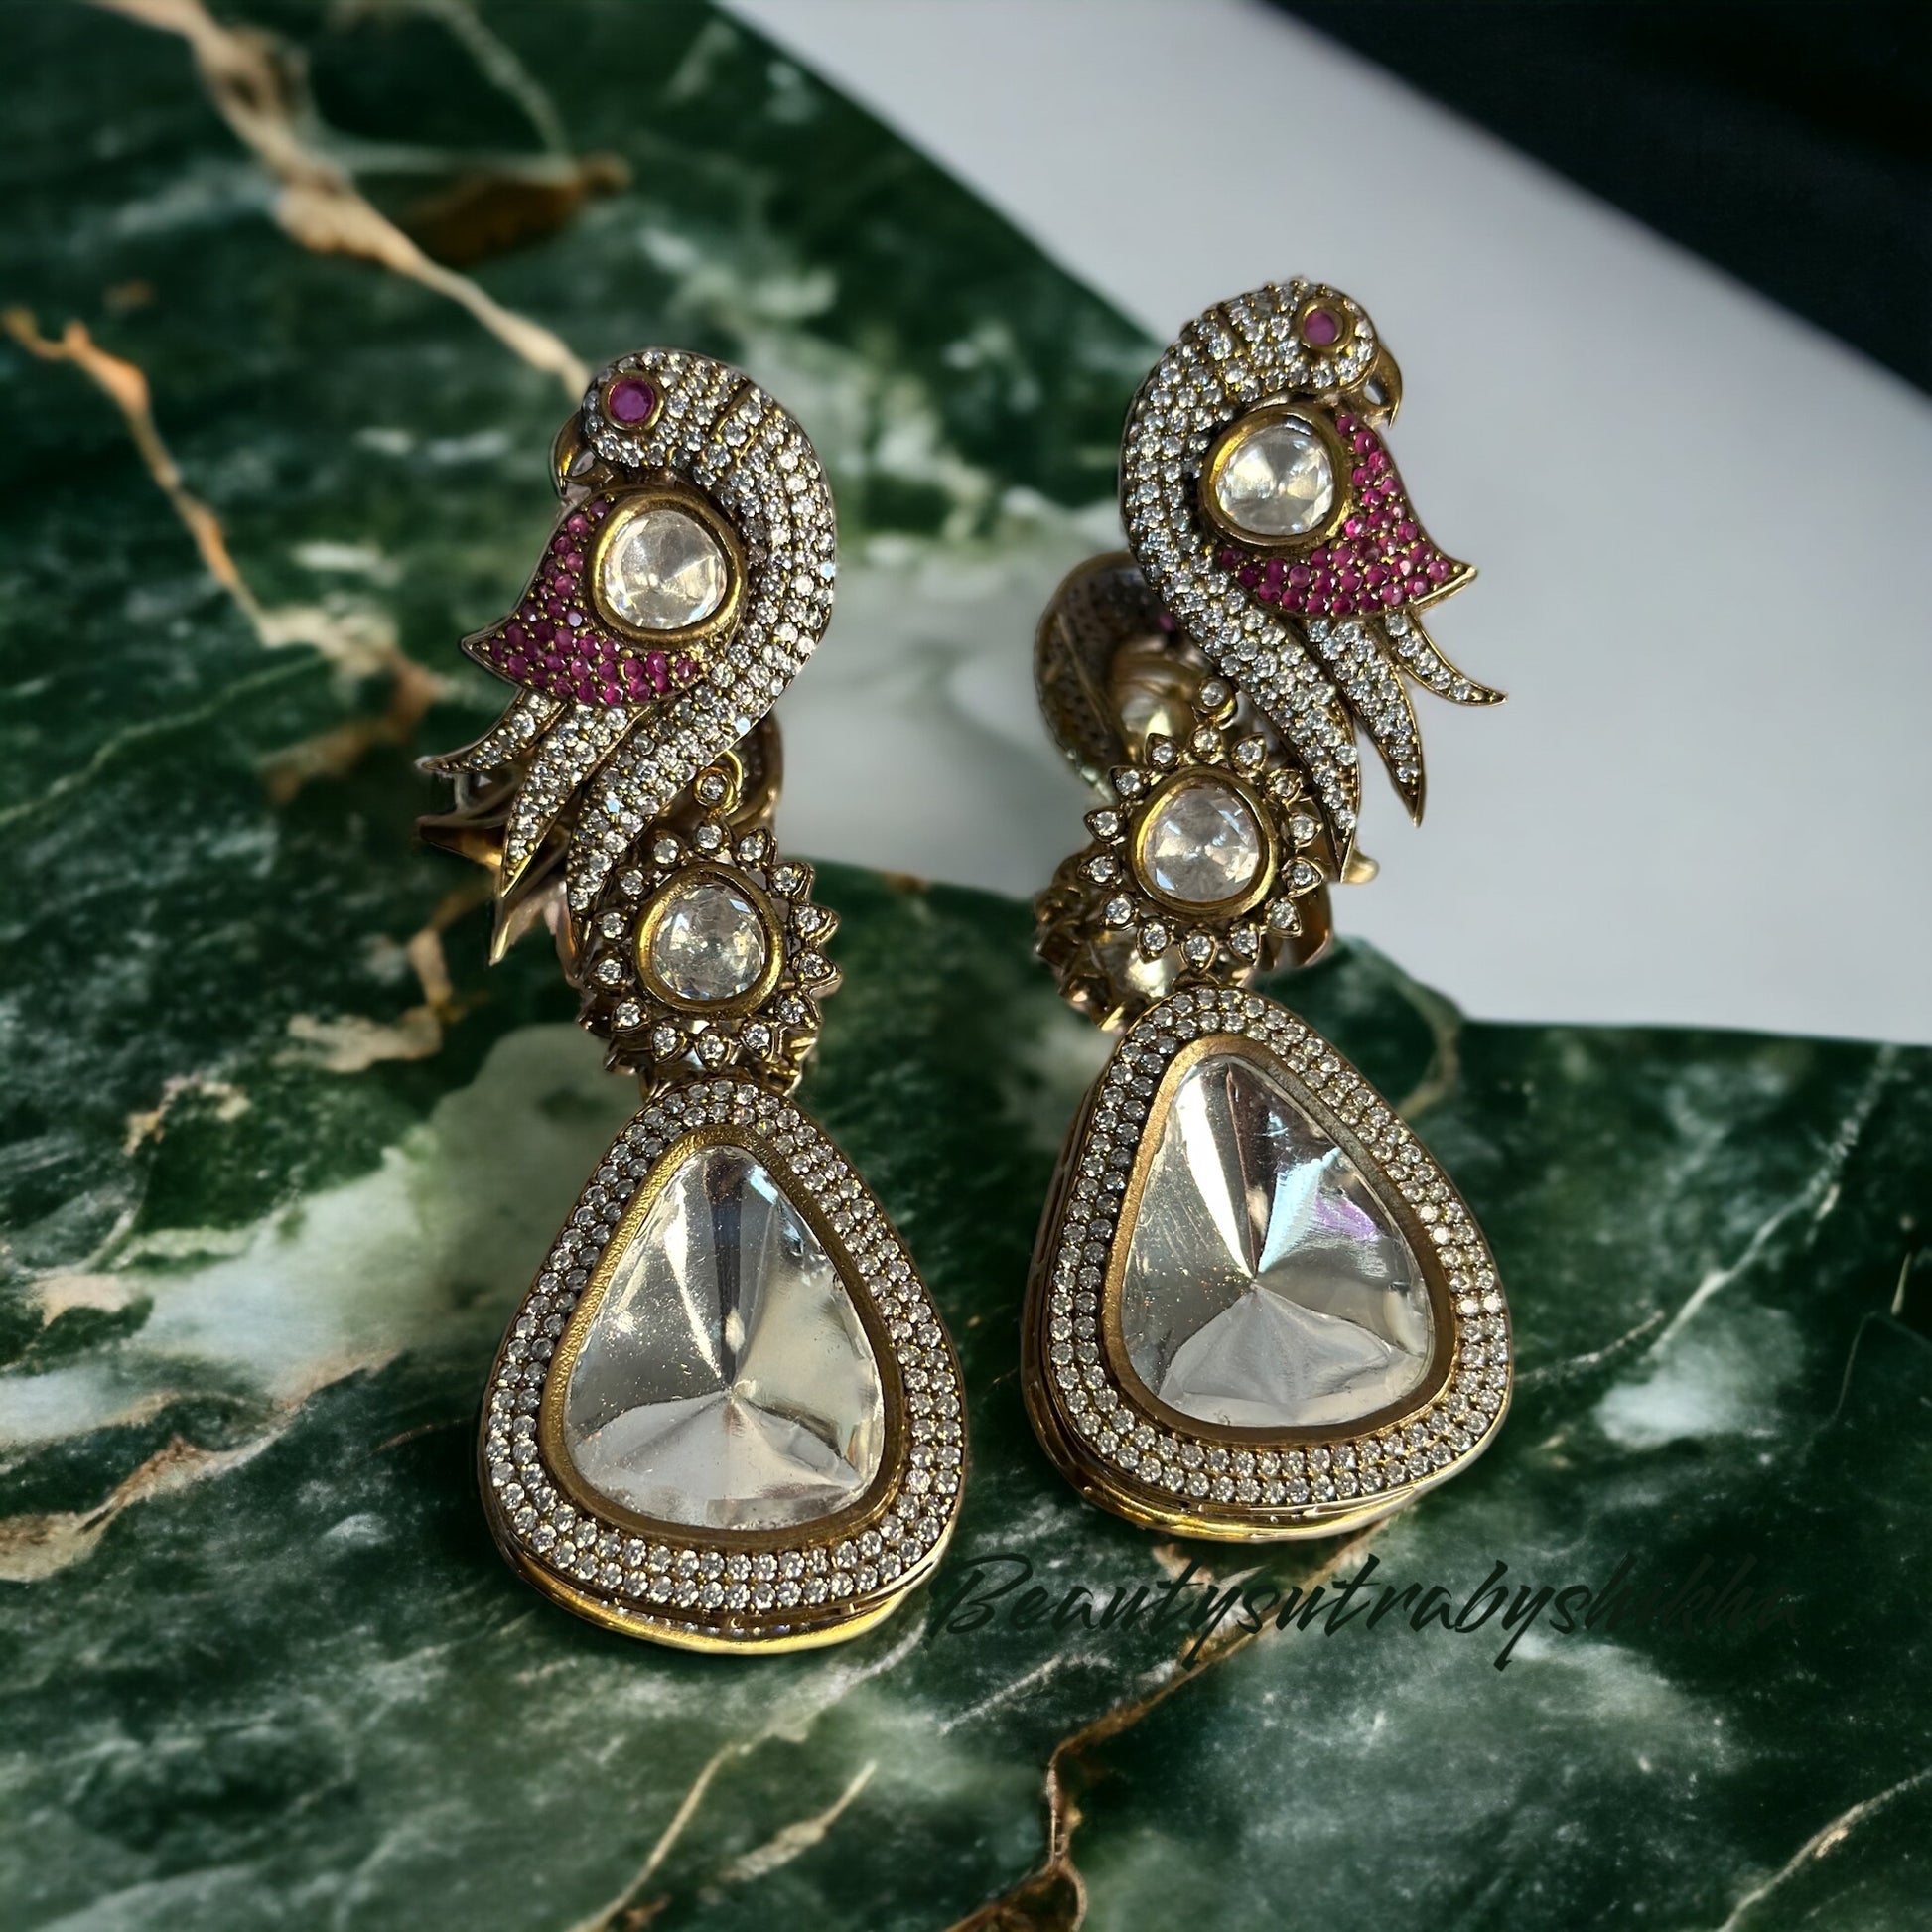 Avian Elegance: Handcrafted Polki Earrings Inspired by Birds